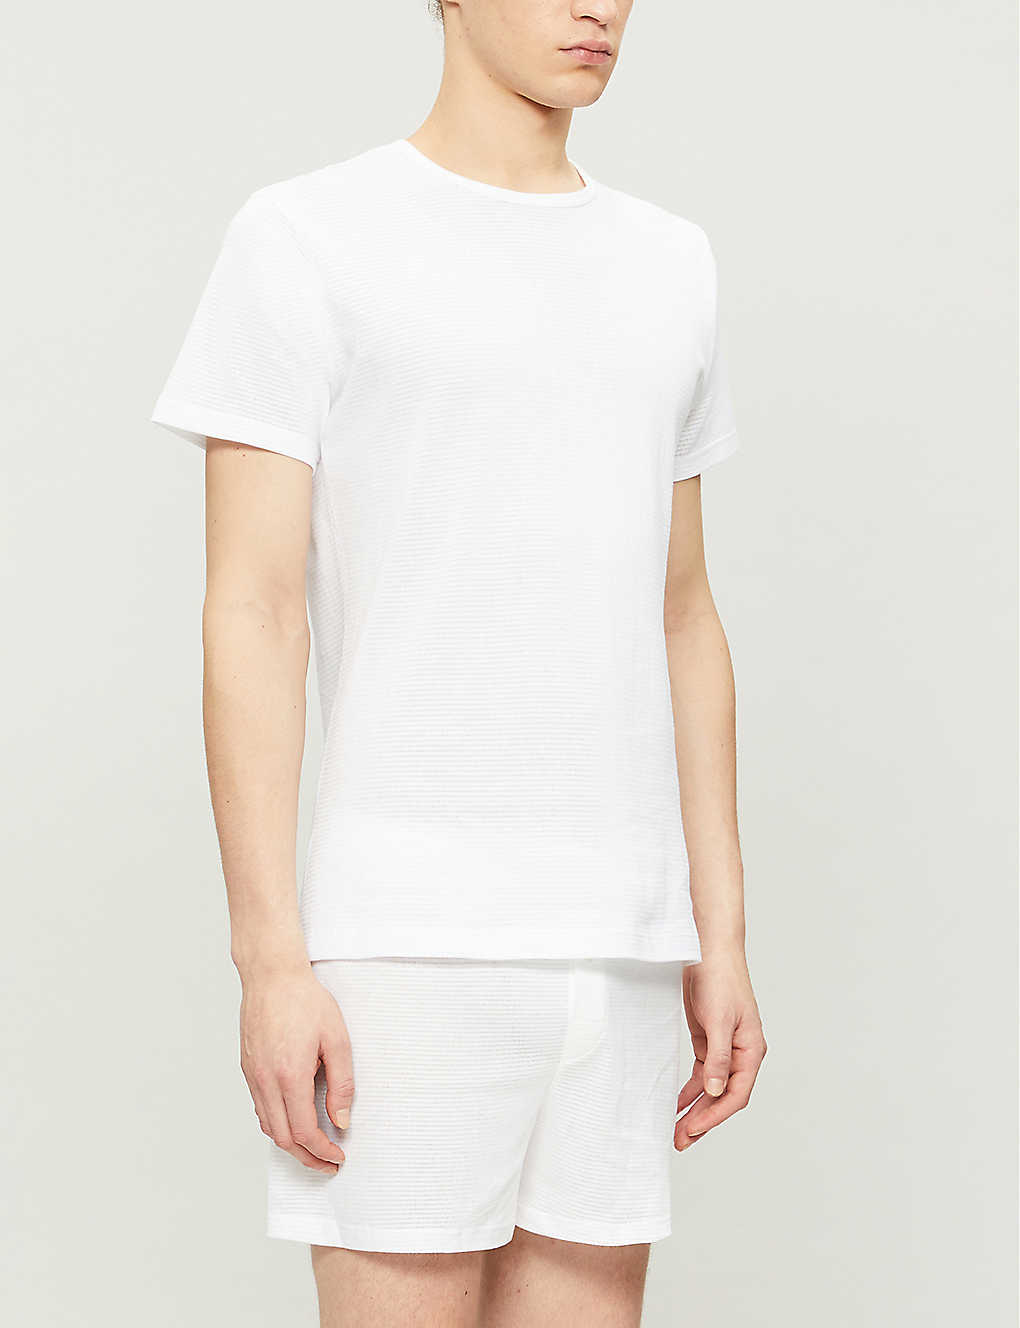 Sunspel Mens White Q14 Cellular Cotton T-shirt